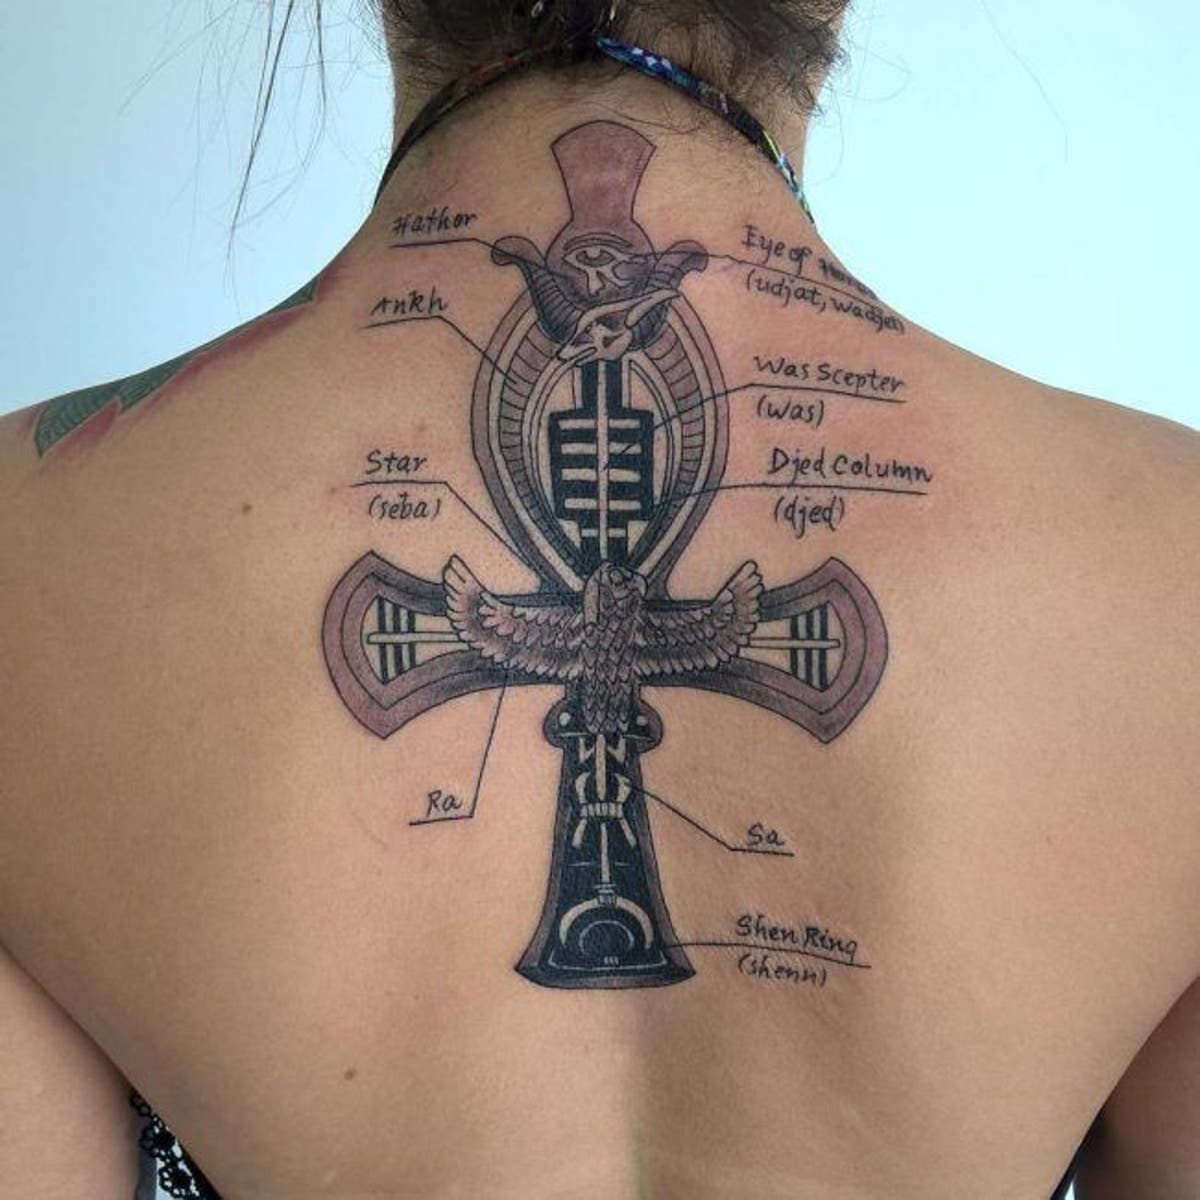 Татуировка крест анкх